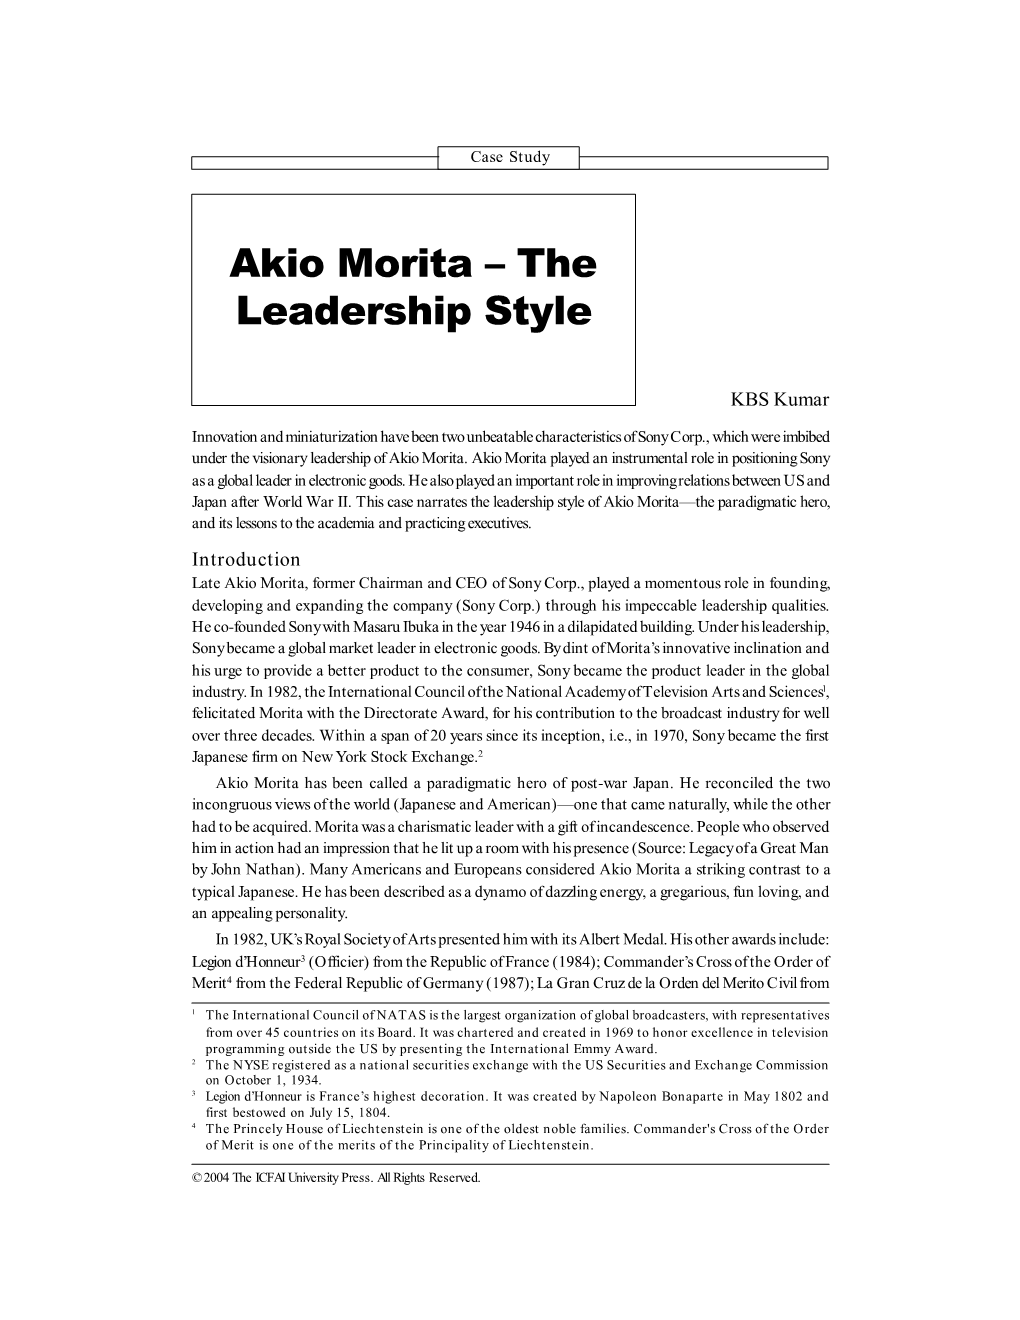 Akio Morita – the Leadership Style